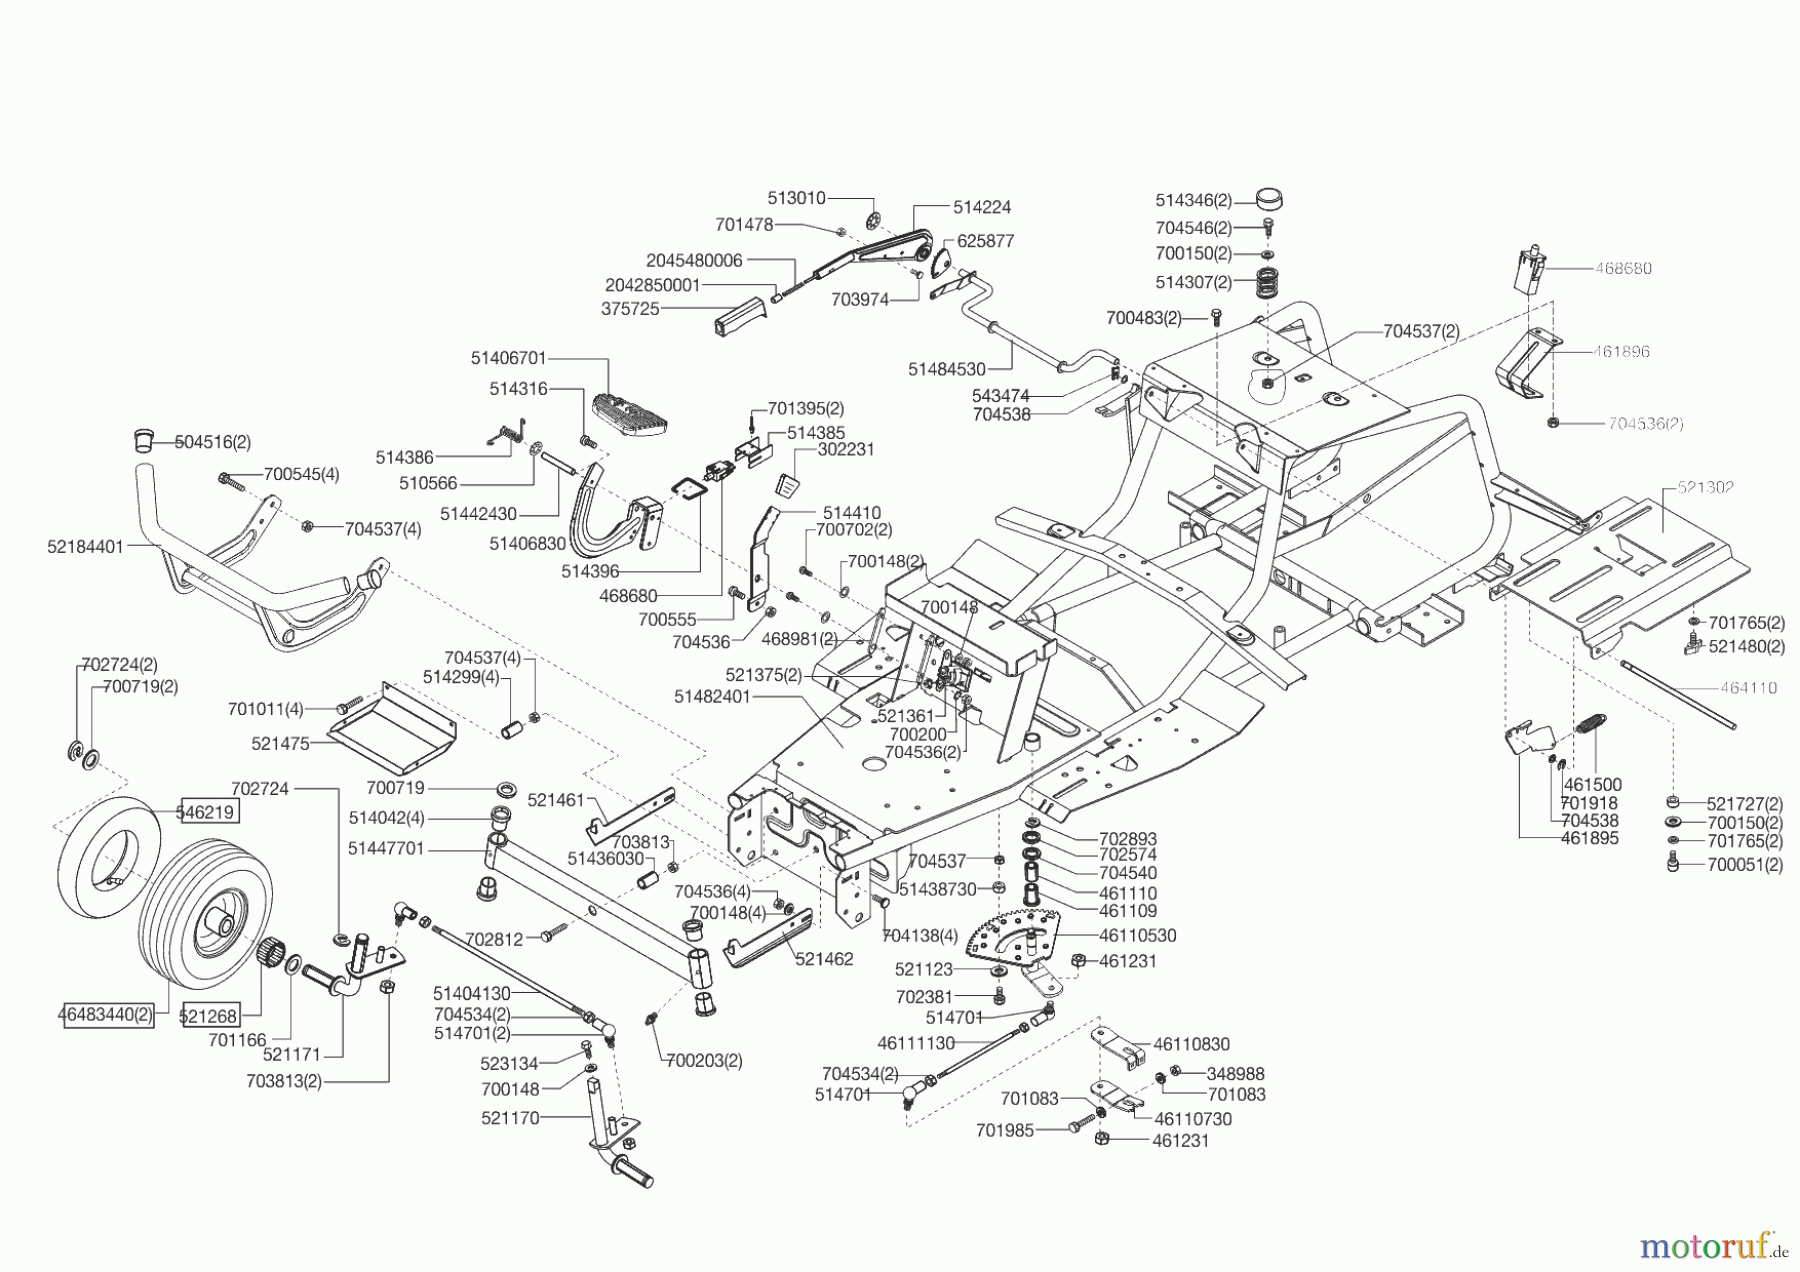  AL-KO Gartentechnik Rasentraktor T 20-102 HD Gulistan  ab 09/2016 Seite 2